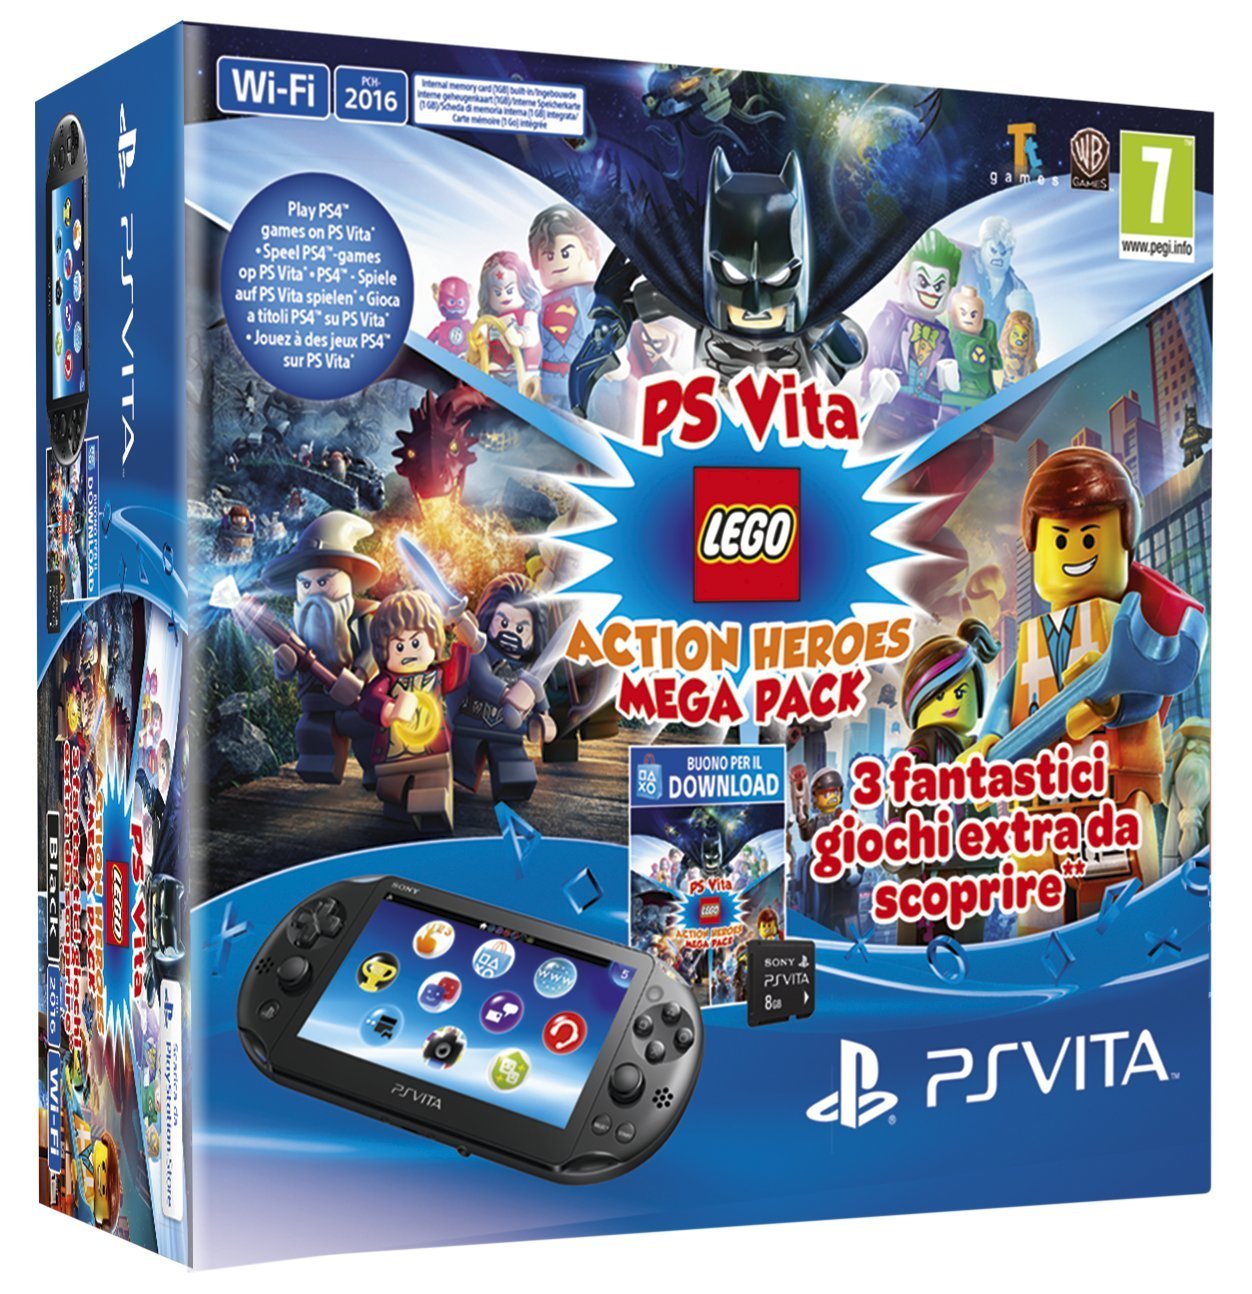 PlayStation Vita (2016), Lego Action Heroes Mega Pack, 8GB Memory card